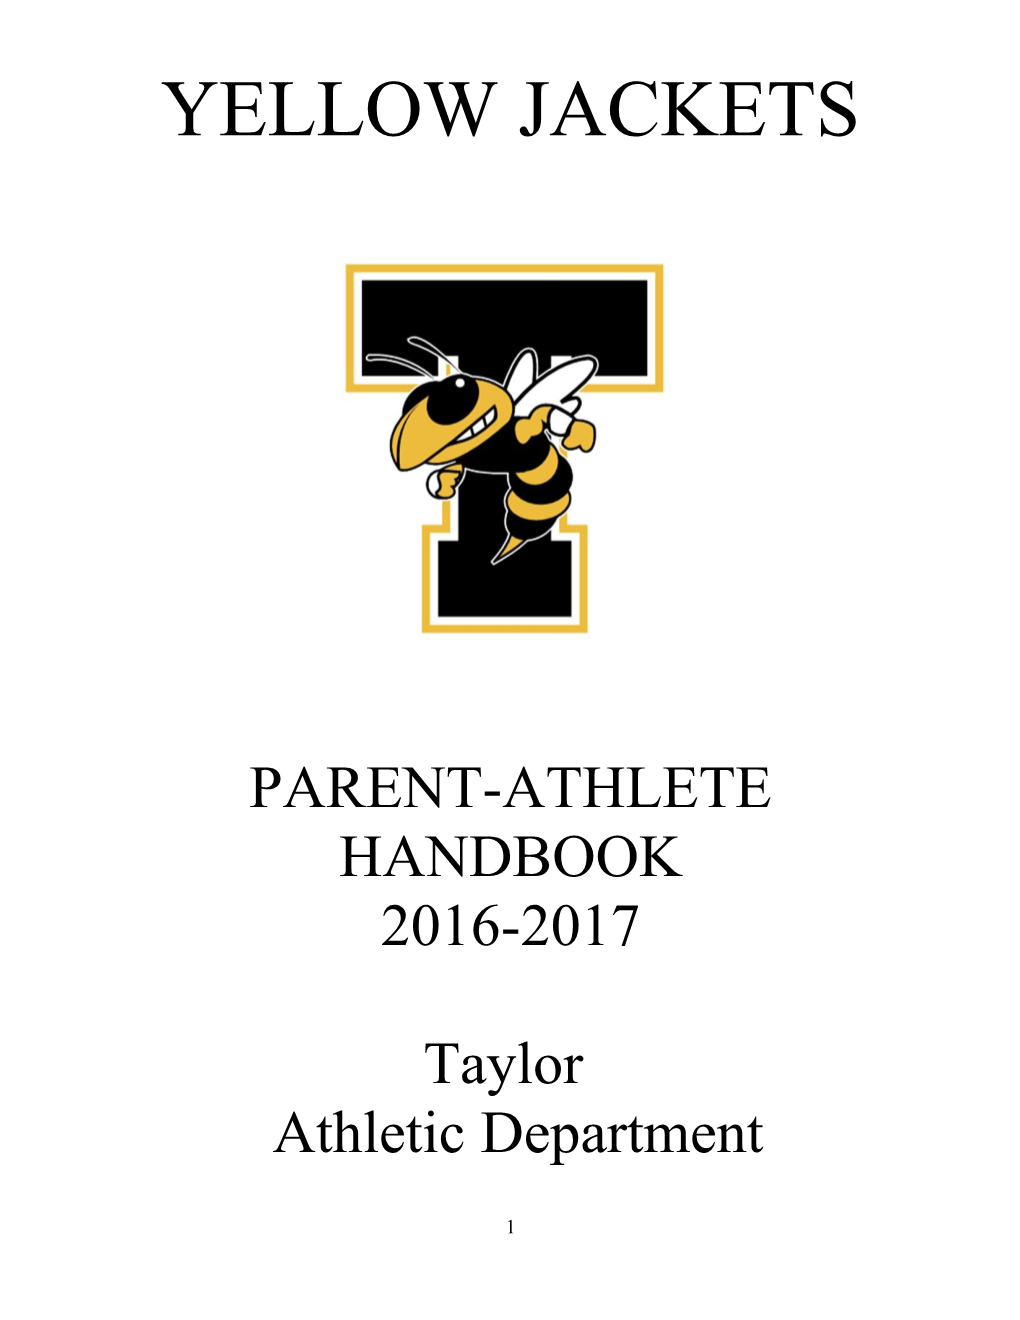 Taylor Parent Athletic Handbook